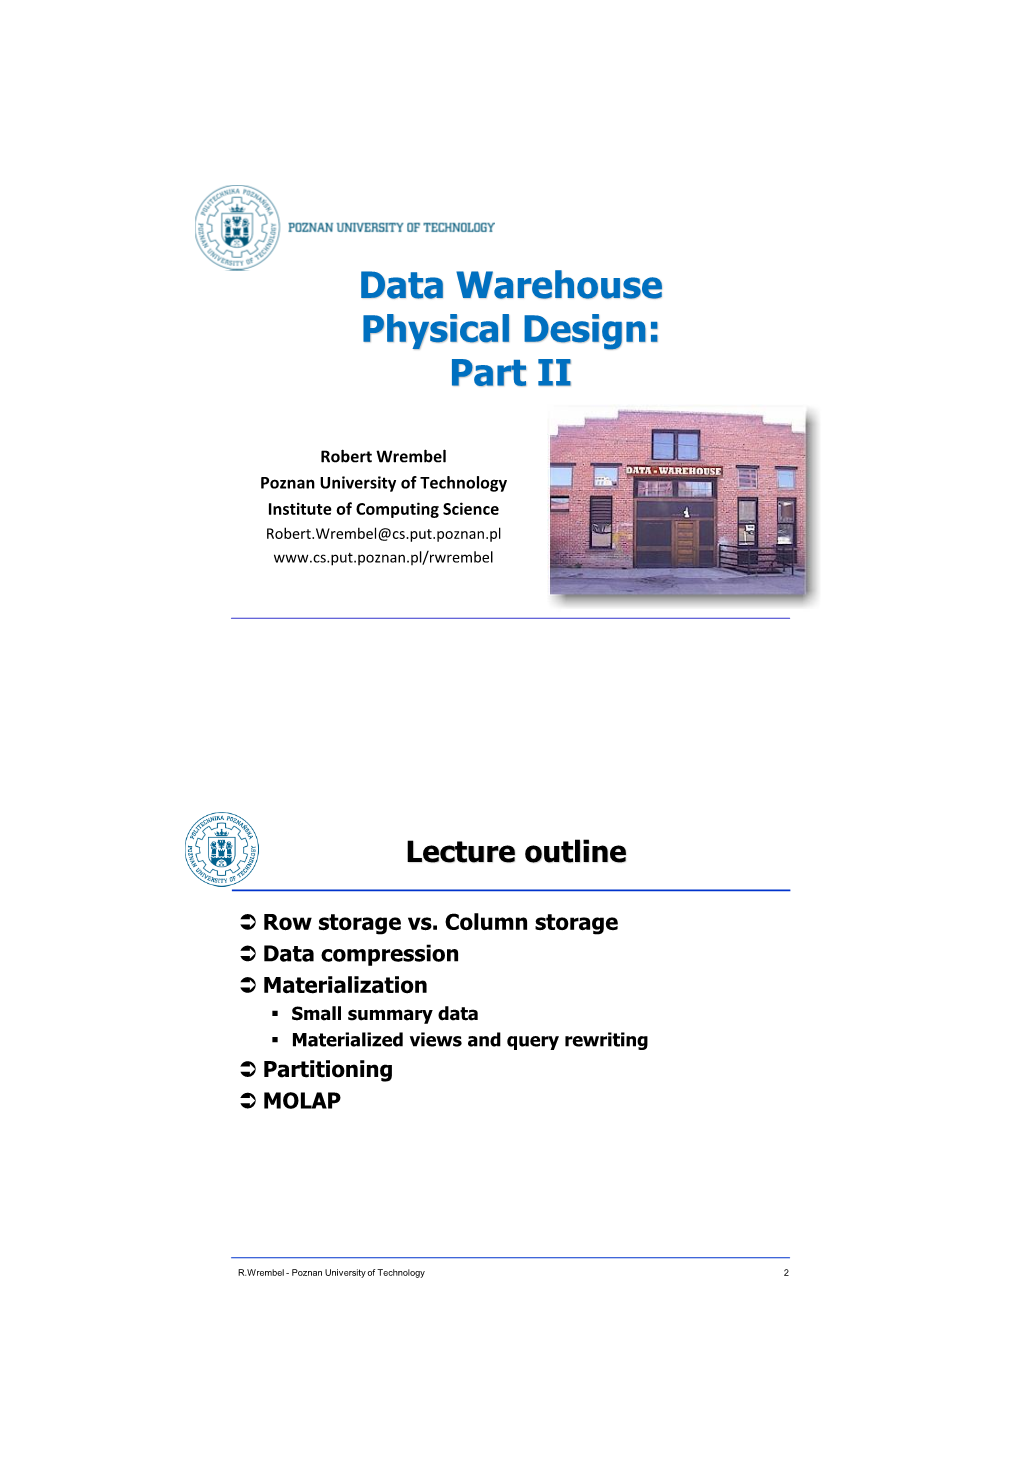 Data Warehouse Physical Design: Part II